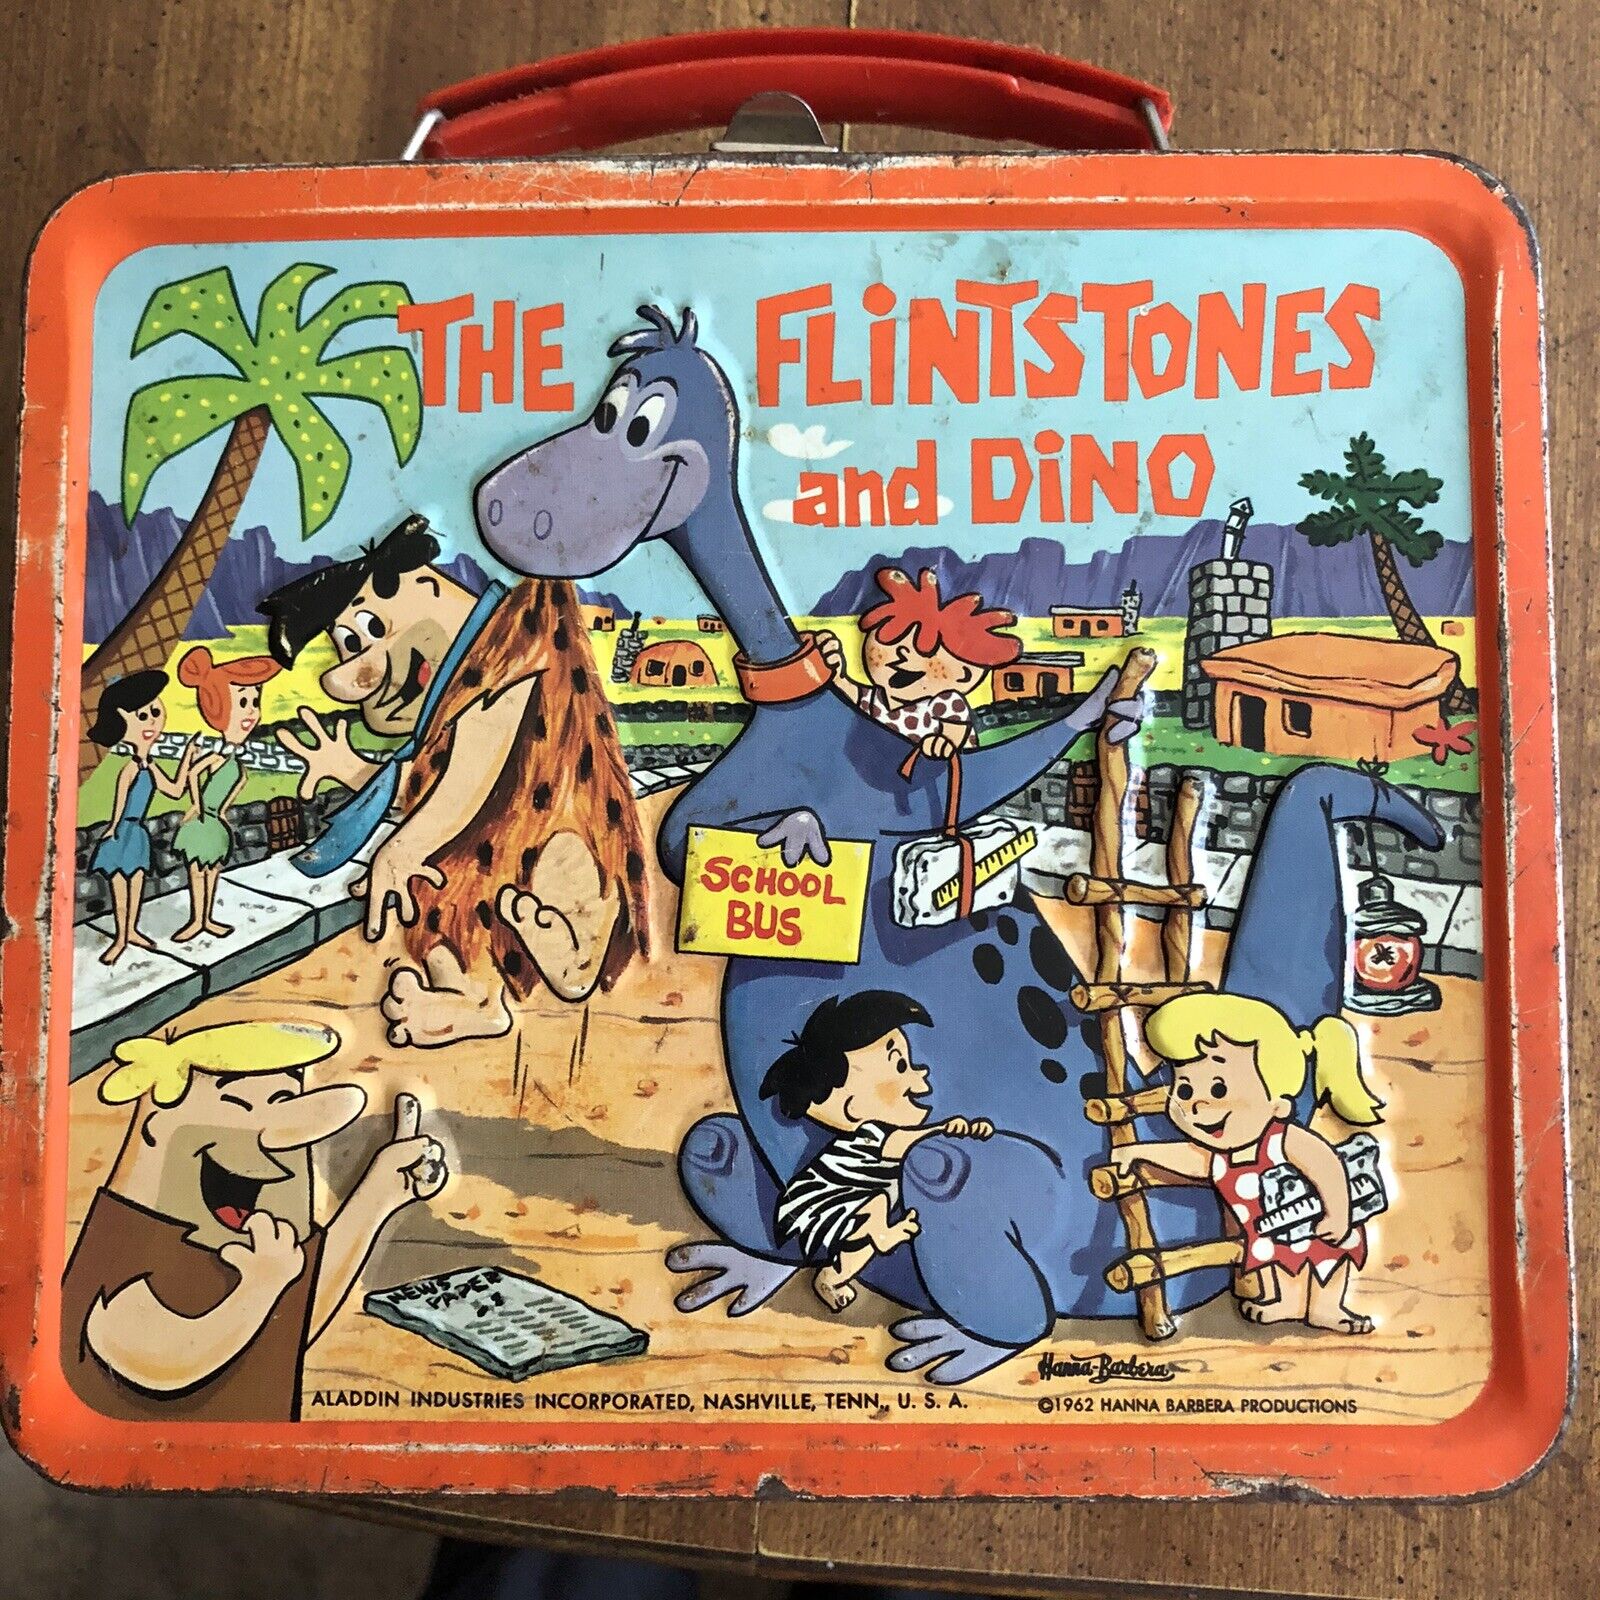 1962 Aladdin Industries Metal Flinstone And Dino Lunch Box